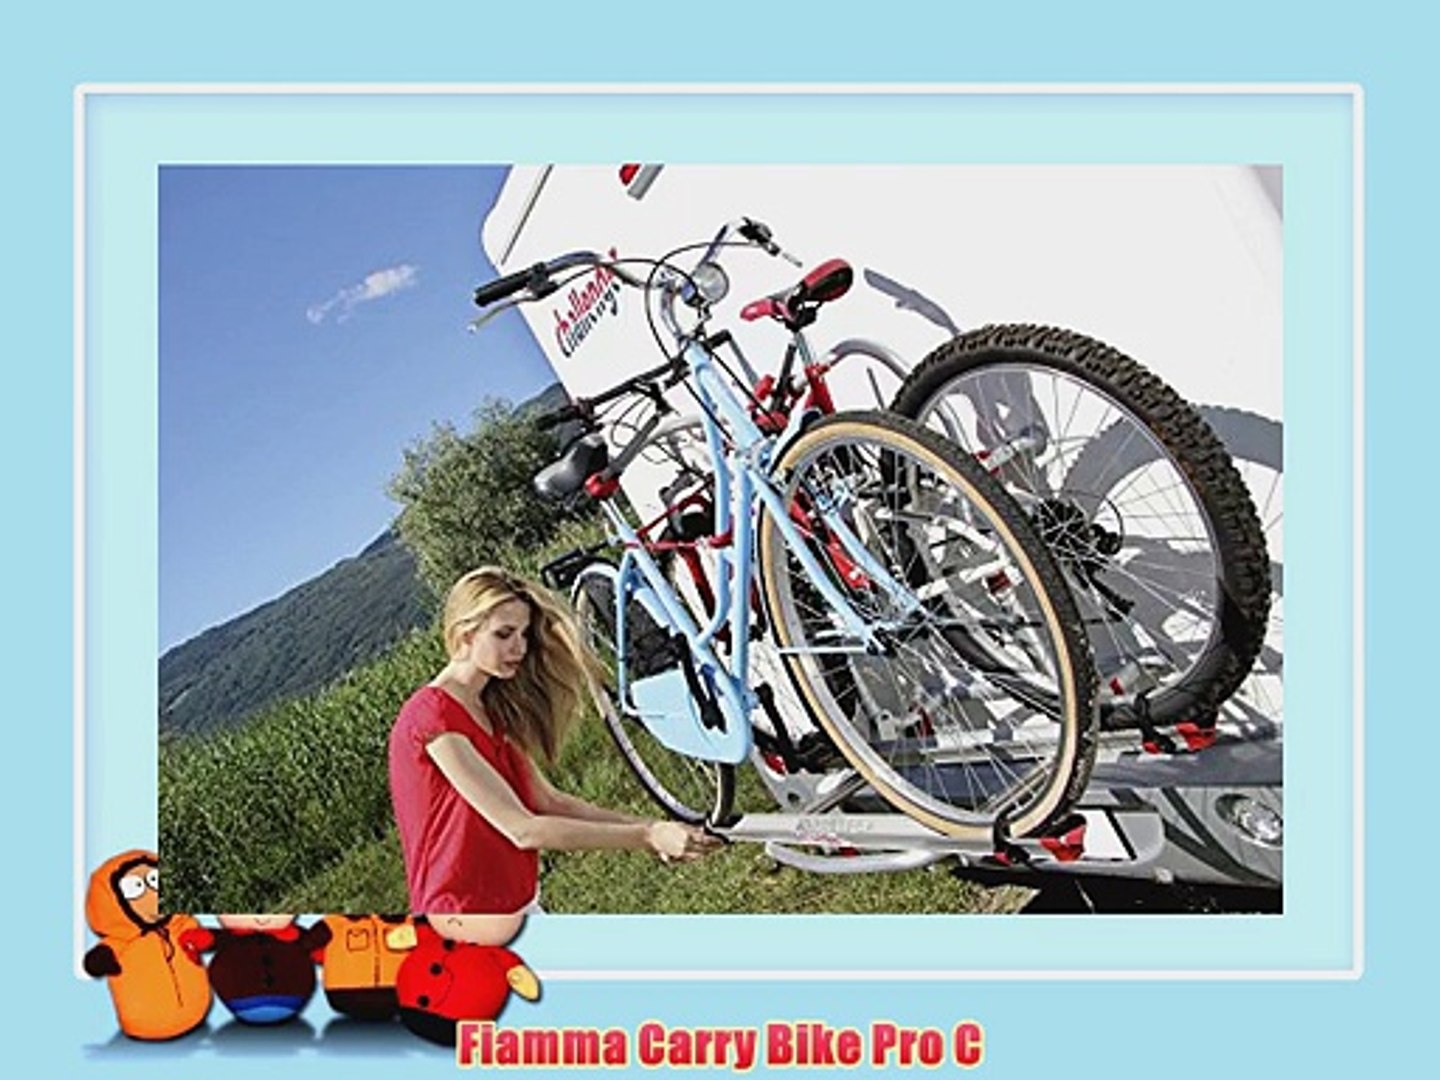 fiamma carry bike pro c